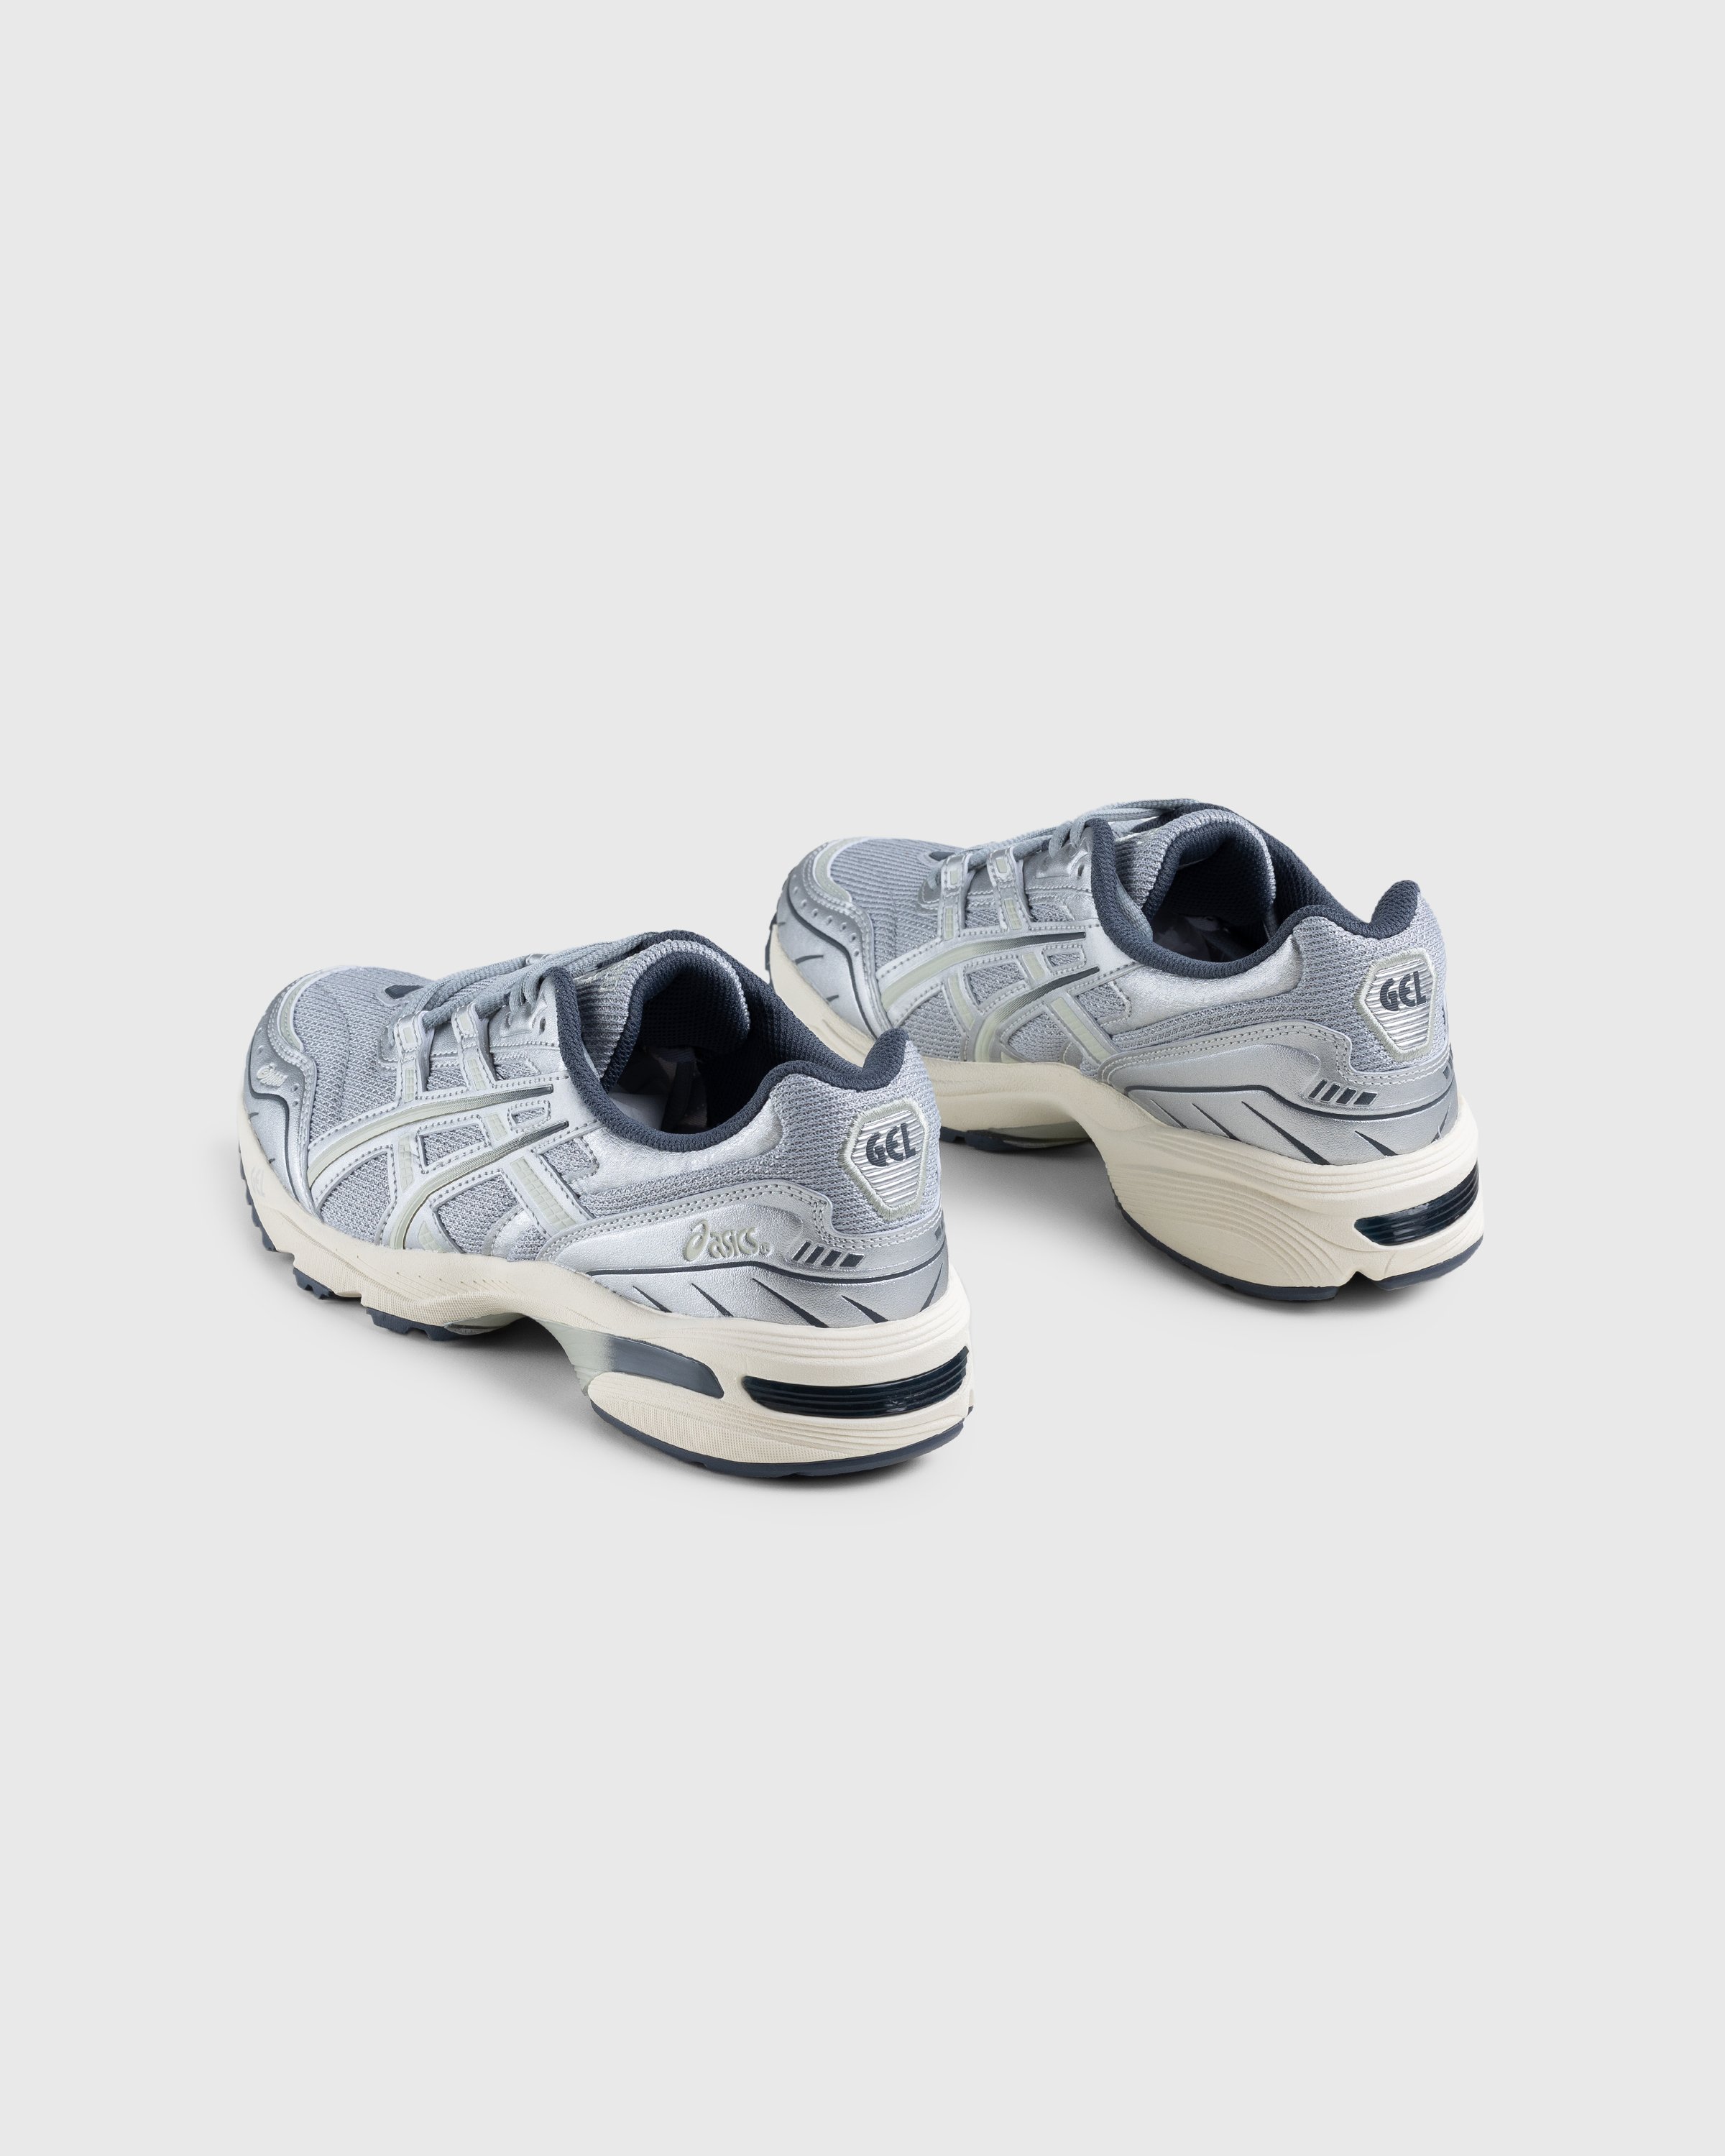 asics - GEL-1090 Piedmont Gray/Tarmac - Footwear - Grey - Image 4